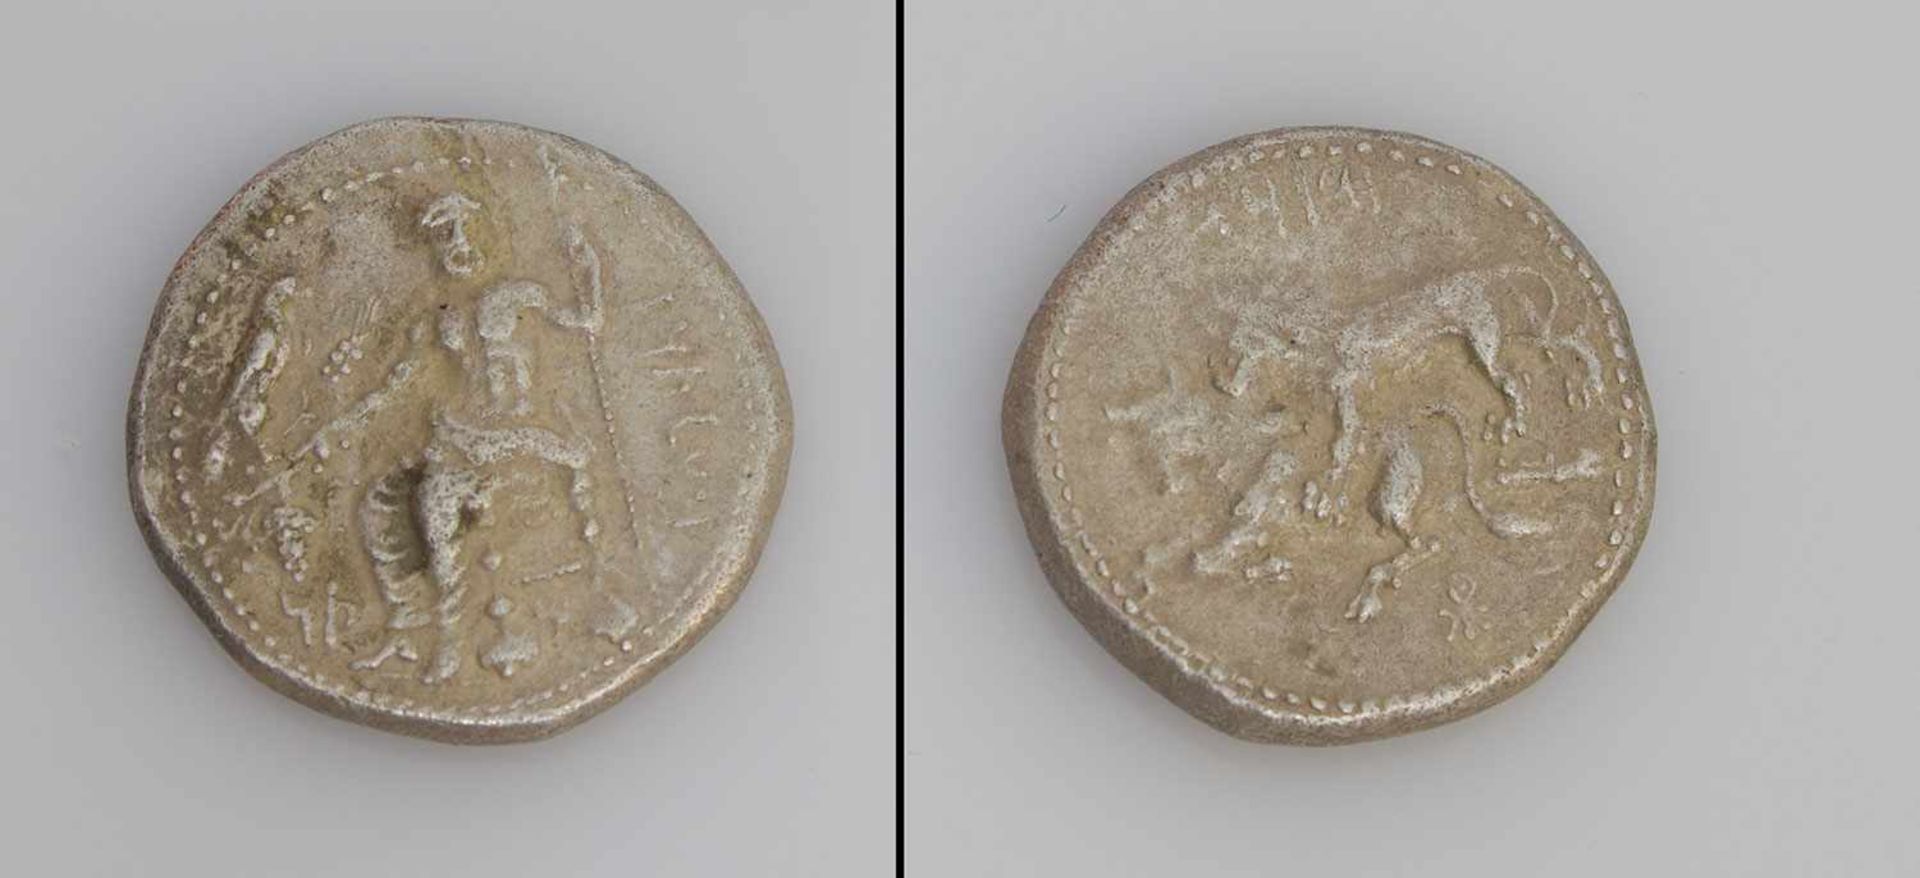 Stater Kilikien/ Tarsos o.J. (361-334 v.Chr.), Baal Tars auf Thron sitzend/ Löwe erlegt Stier, G.